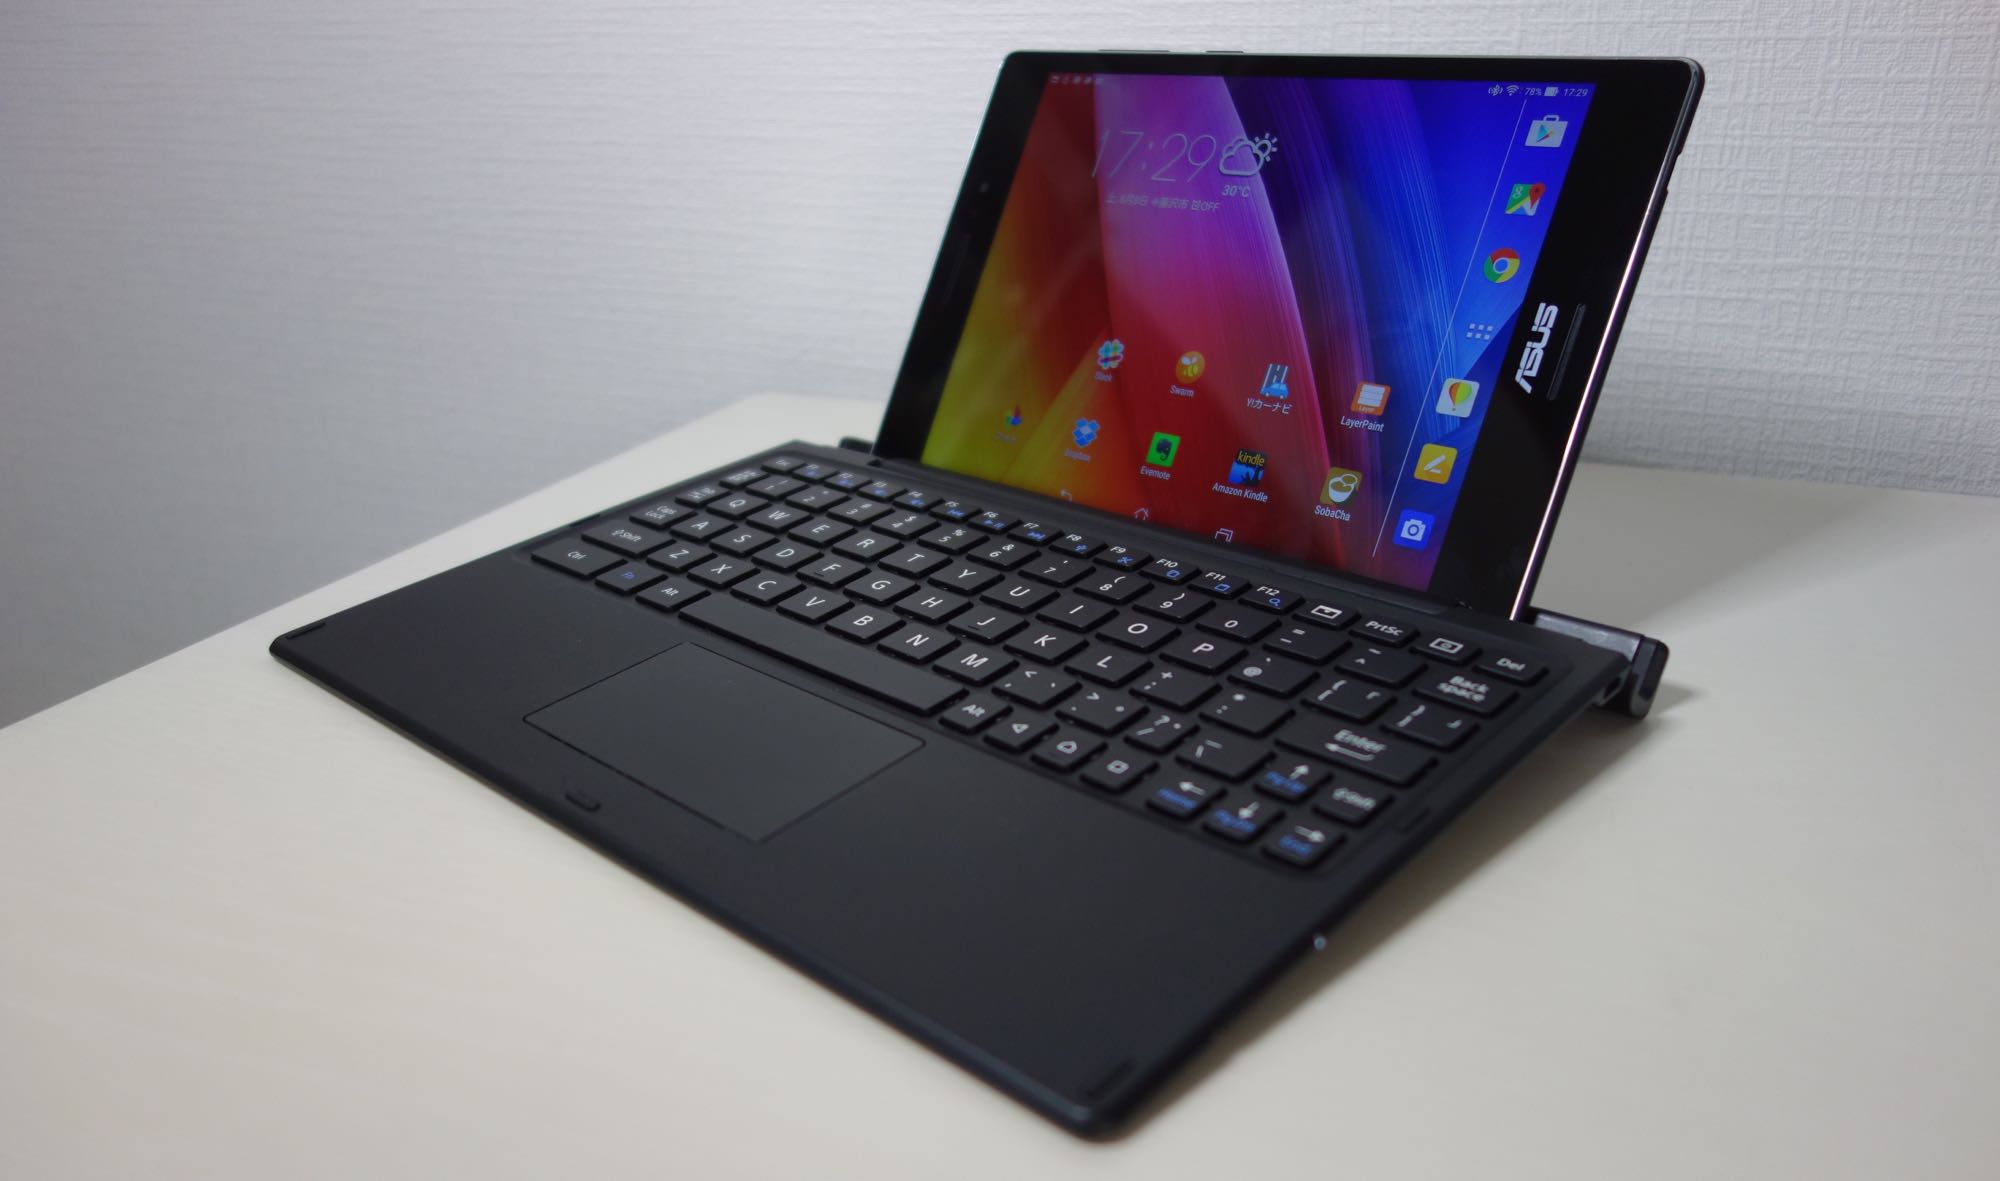 Xperia Z4 Tablet純正キーボードBKB50をZenPad S 8.0やiPad Air 2で 